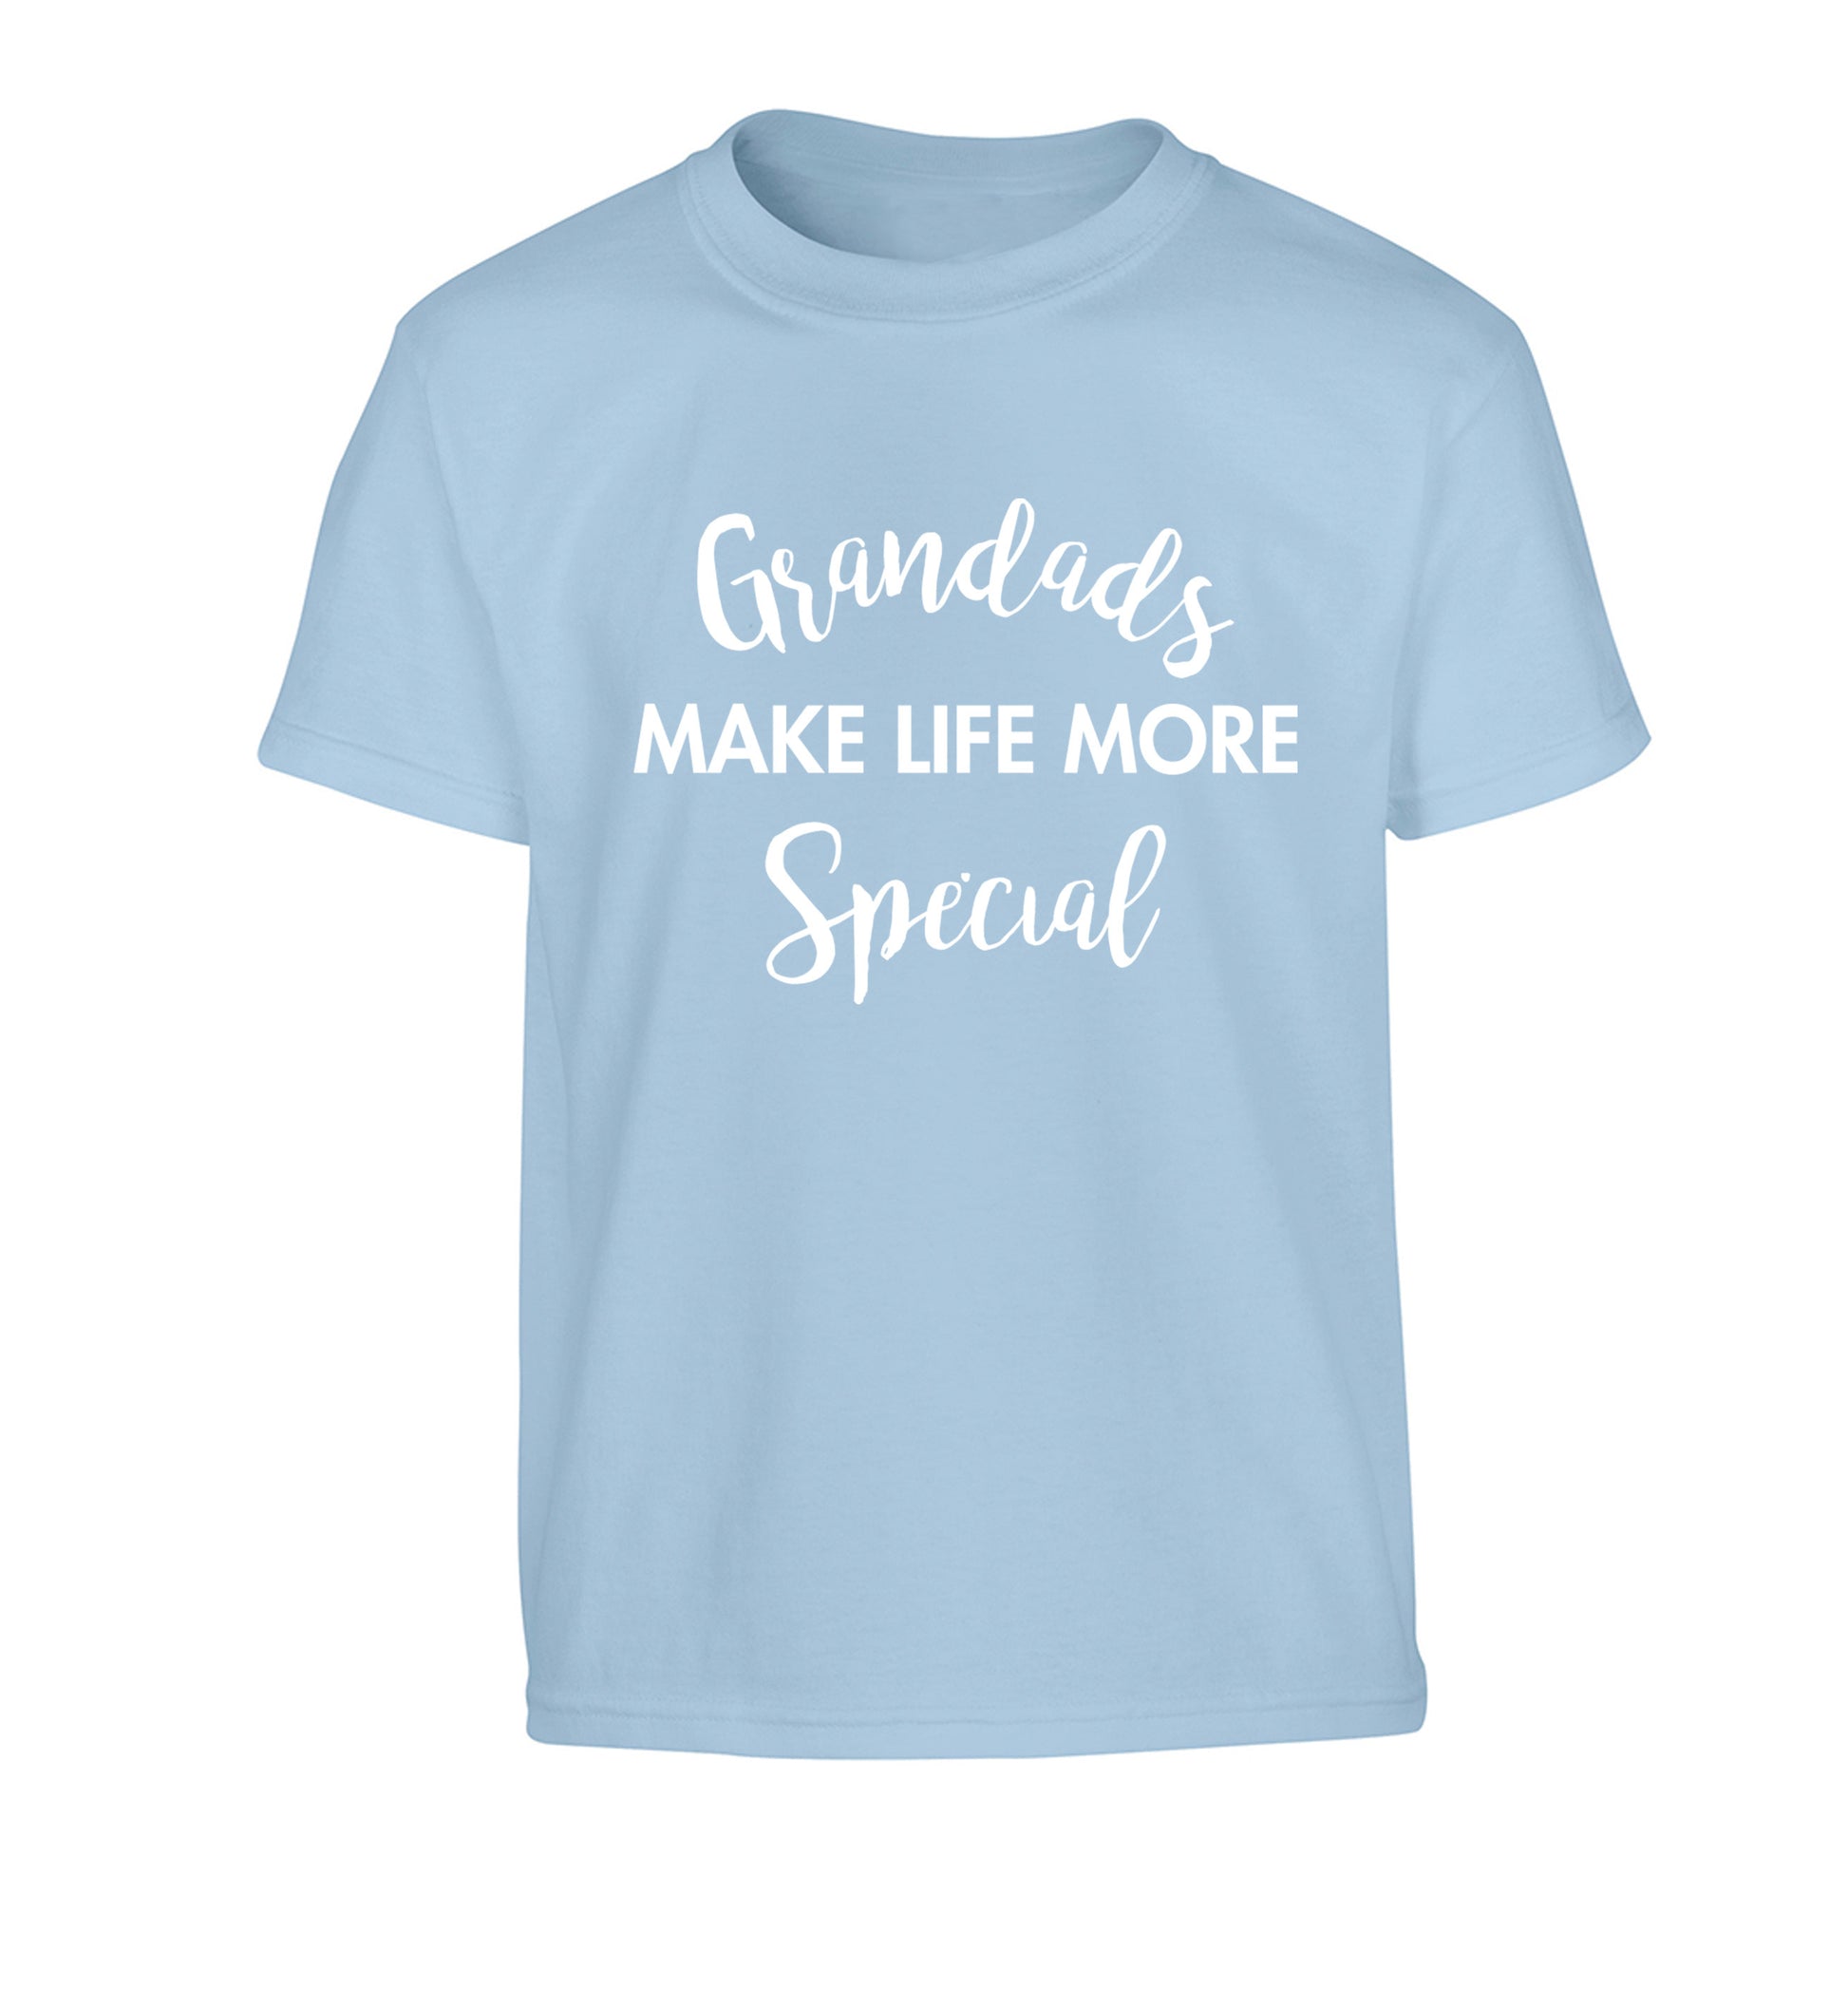 Grandads make life more special Children's light blue Tshirt 12-14 Years